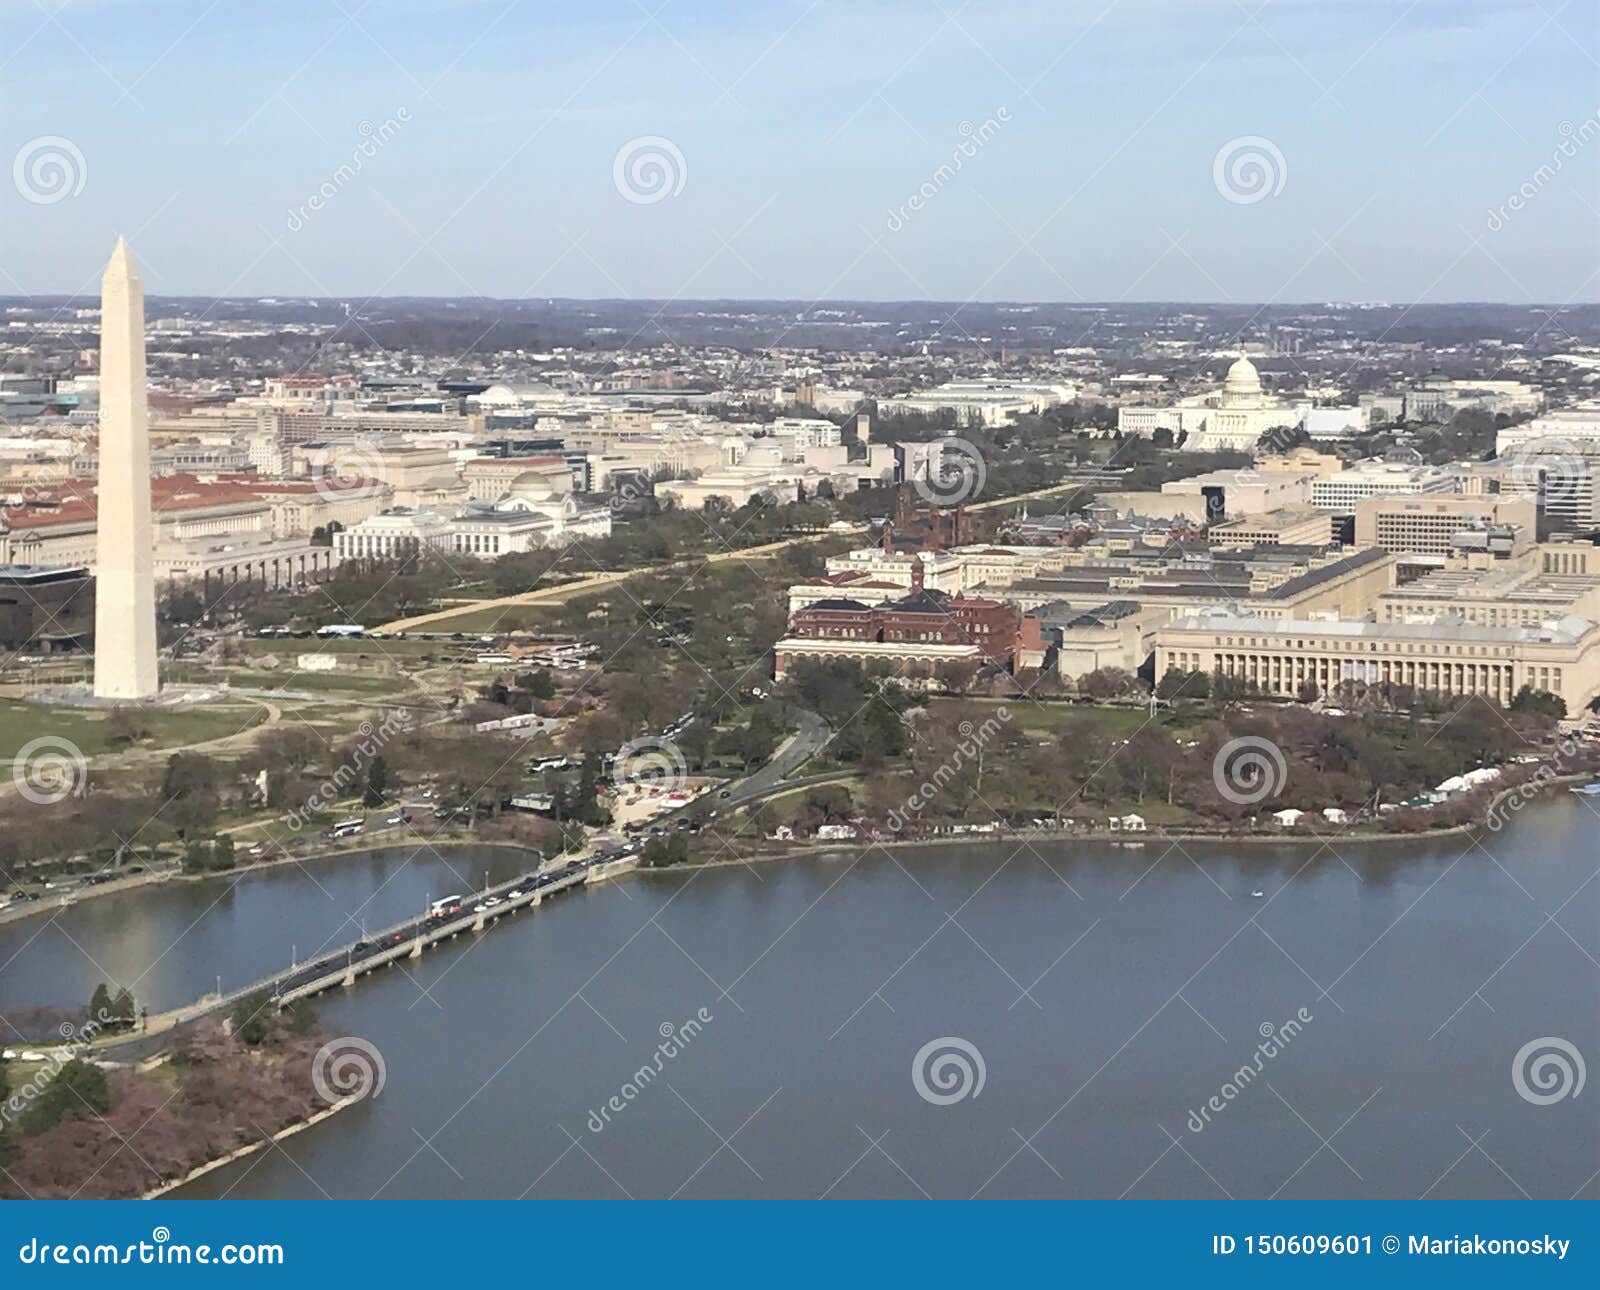 Aerial View Of Washington Dc Skyline Stock Image Image Of Monuments